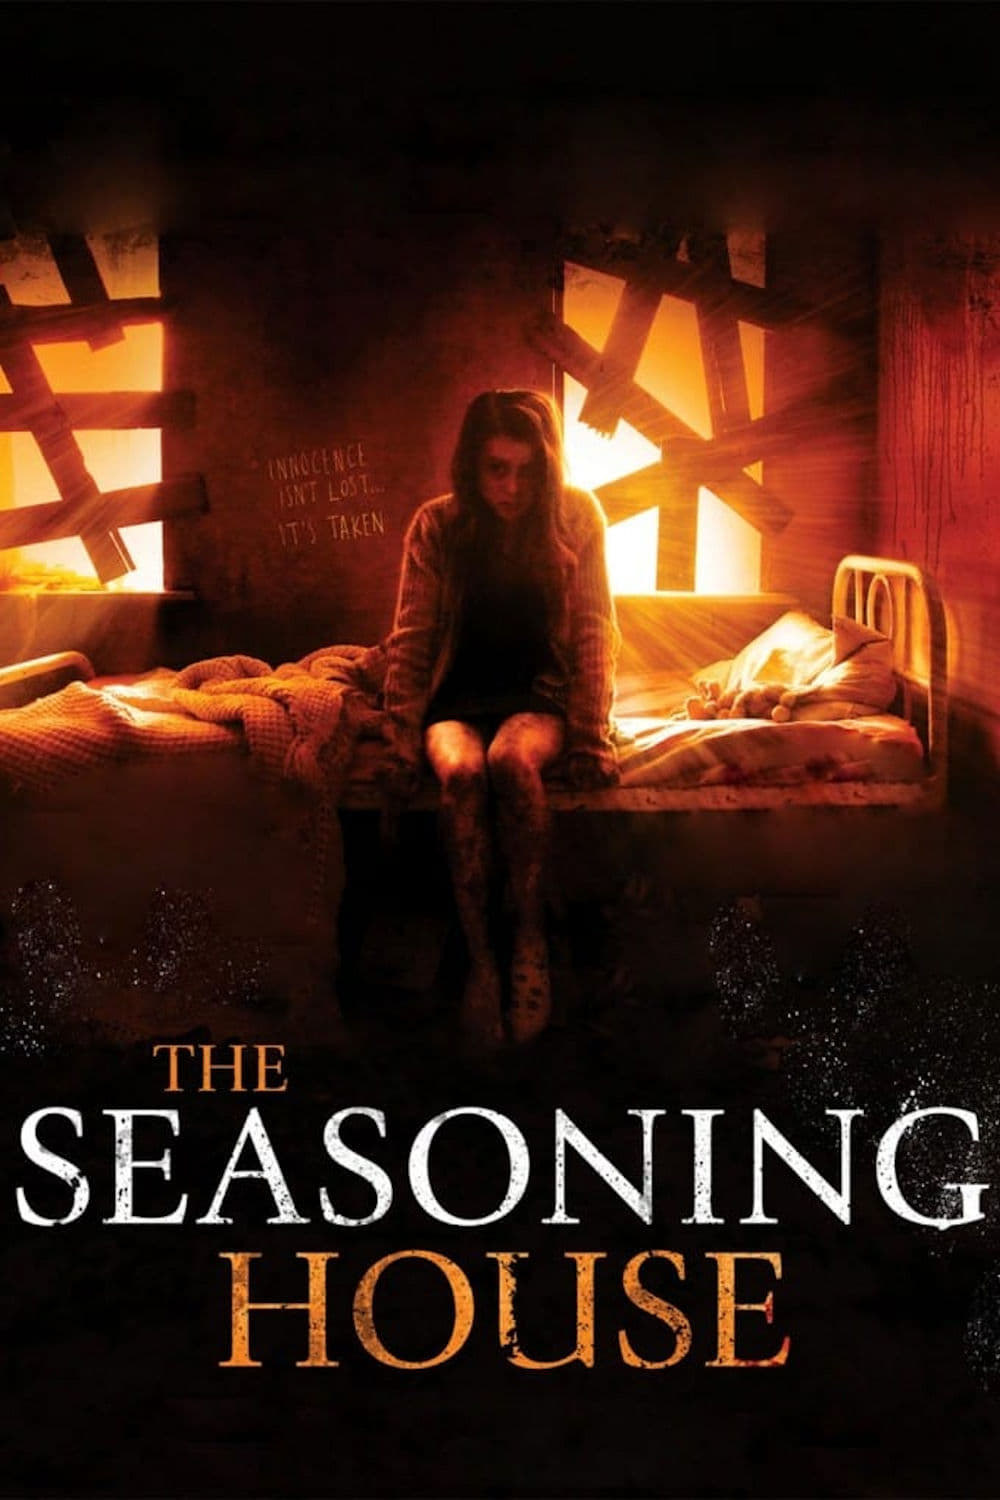 The Seasoning House film